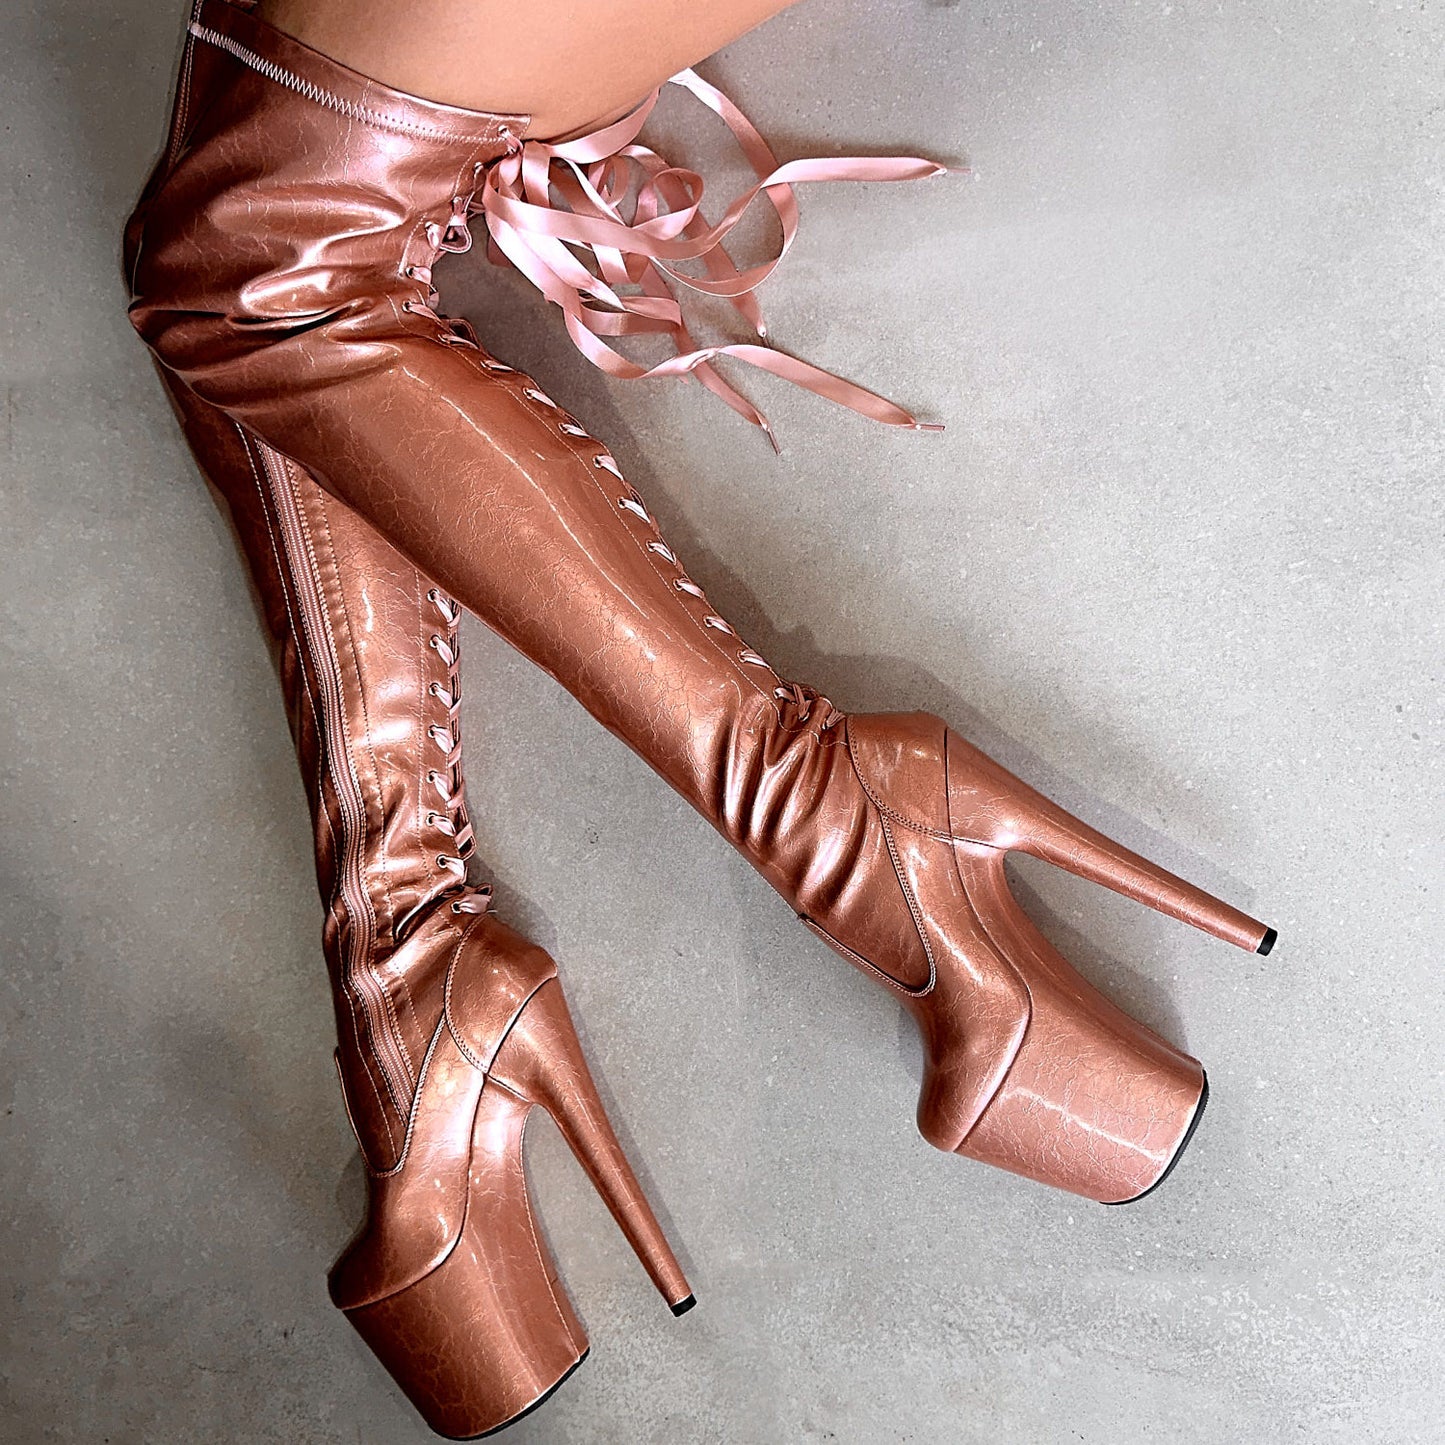 Heartbreaker - Rose Gold Thigh High - 8 INCH, stripper shoe, stripper heel, pole heel, not a pleaser, platform, dancer, pole dance, floor work